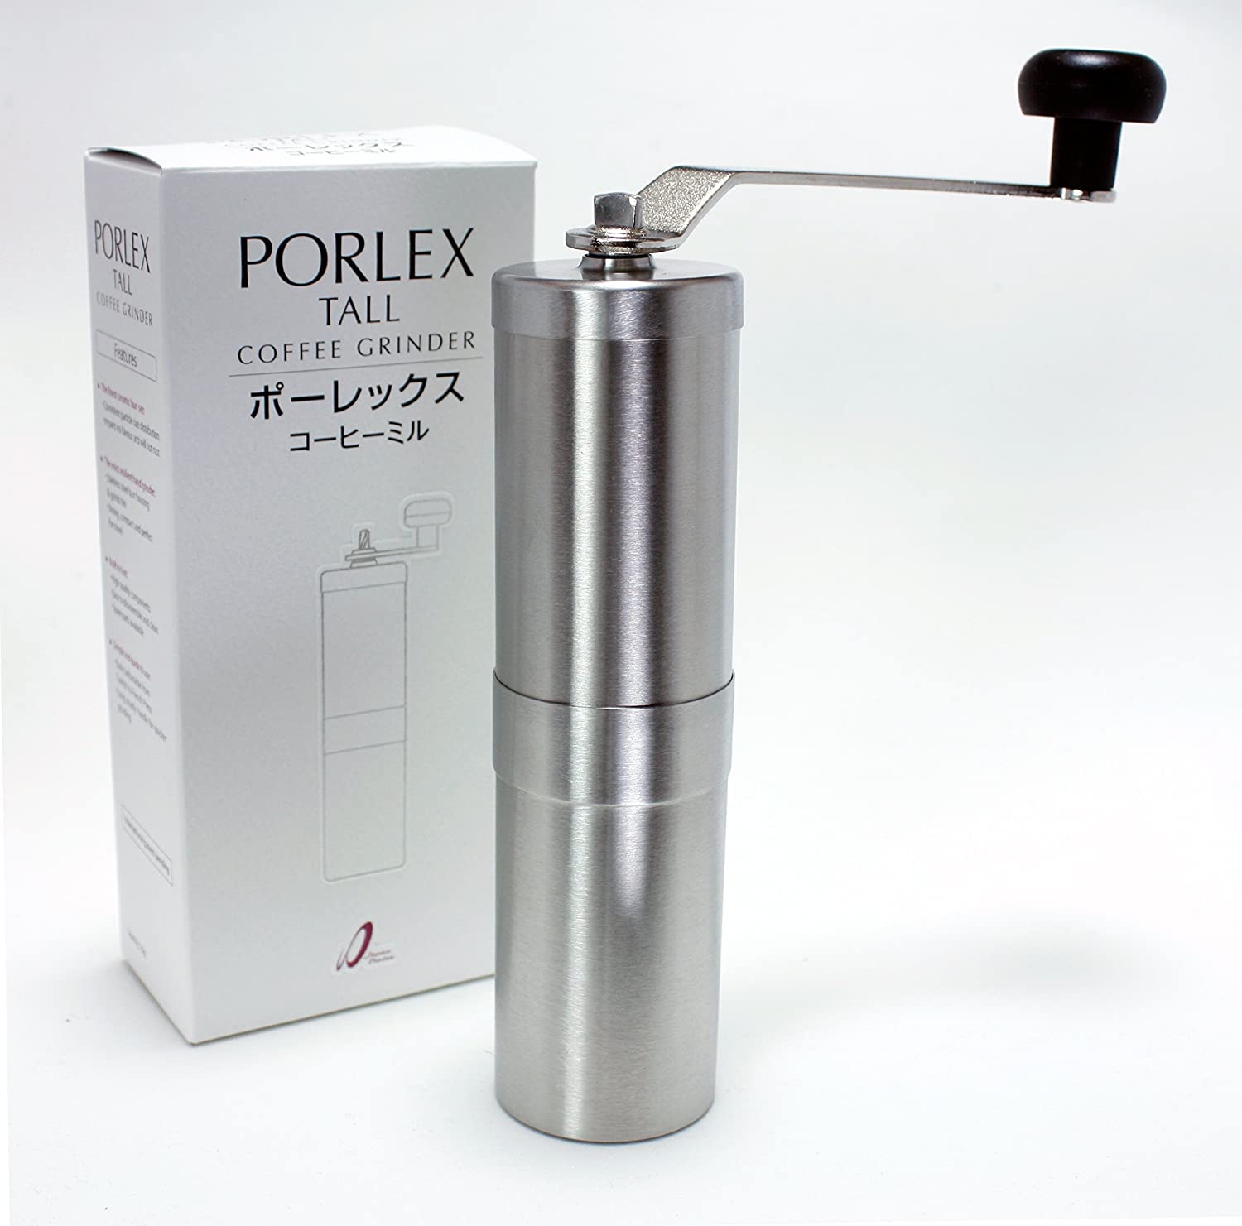 PORLEX(ポーレックス) ポーレックス コーヒーミルⅡ シルバーの商品画像サムネ4 